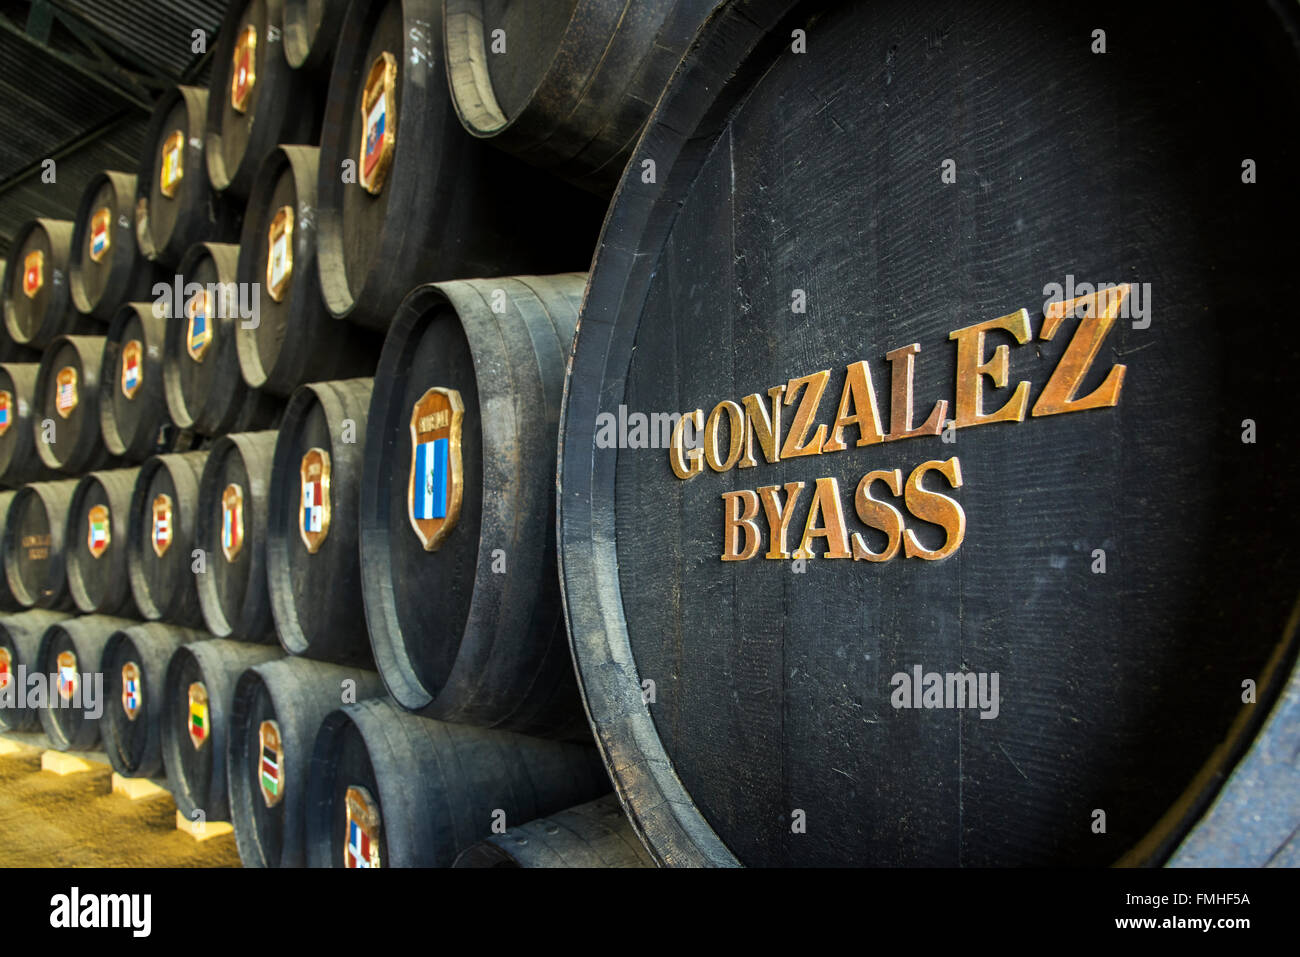 Gonzales Byass Winery, Jerez de la Frontera, Andalusia, Spain Stock Photo